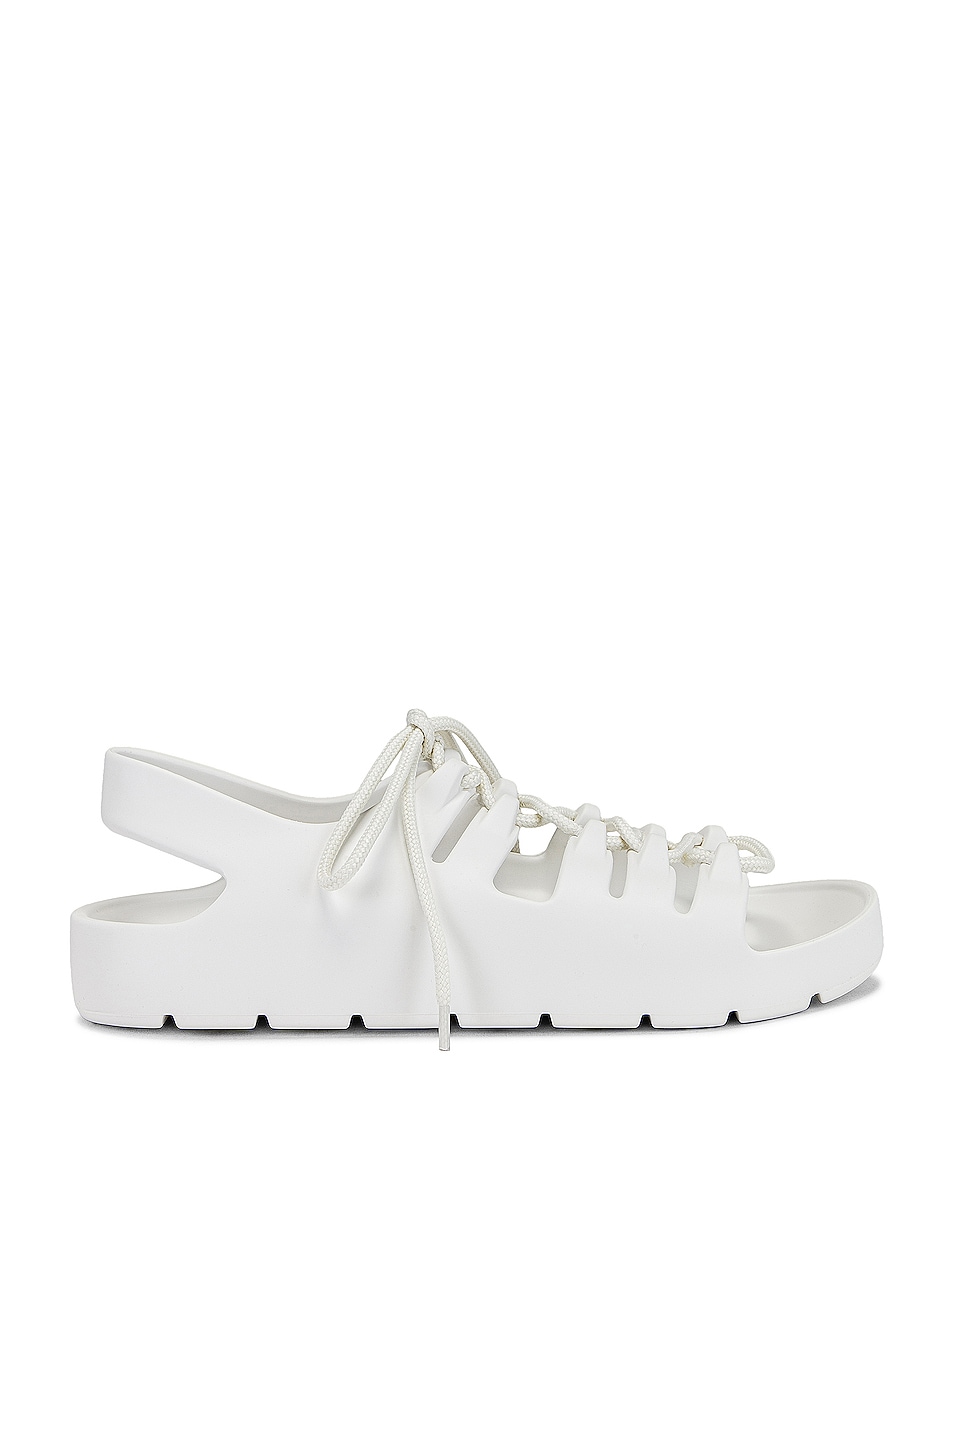 Bottega Veneta Jelly Lace Up Sandals in White